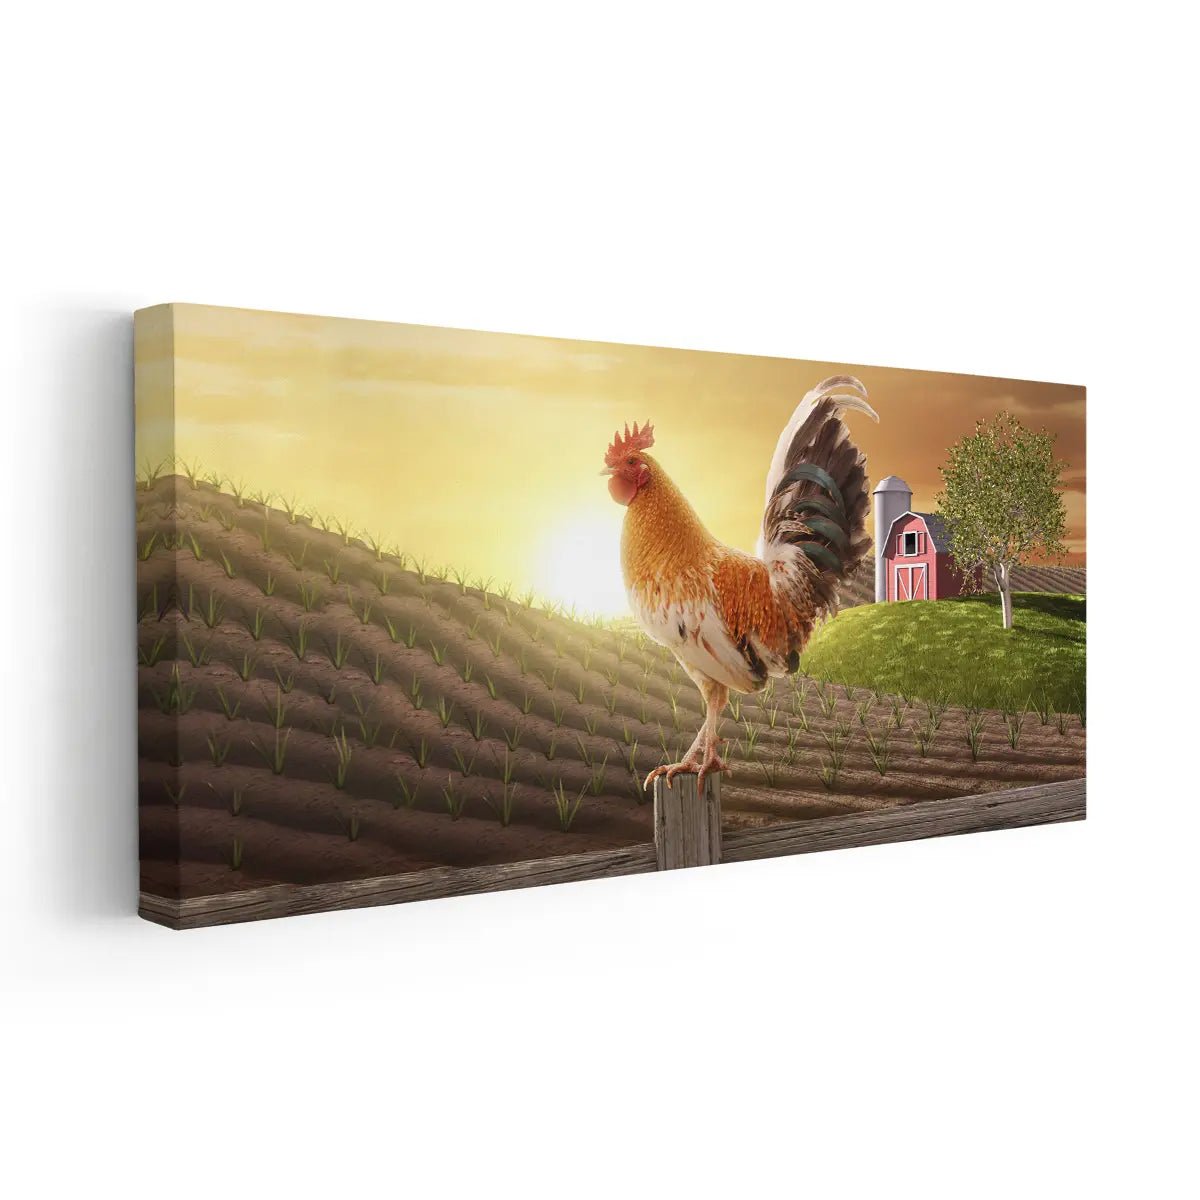 Roaster On A Farm Fence Wall Art-Stunning Canvas Prints